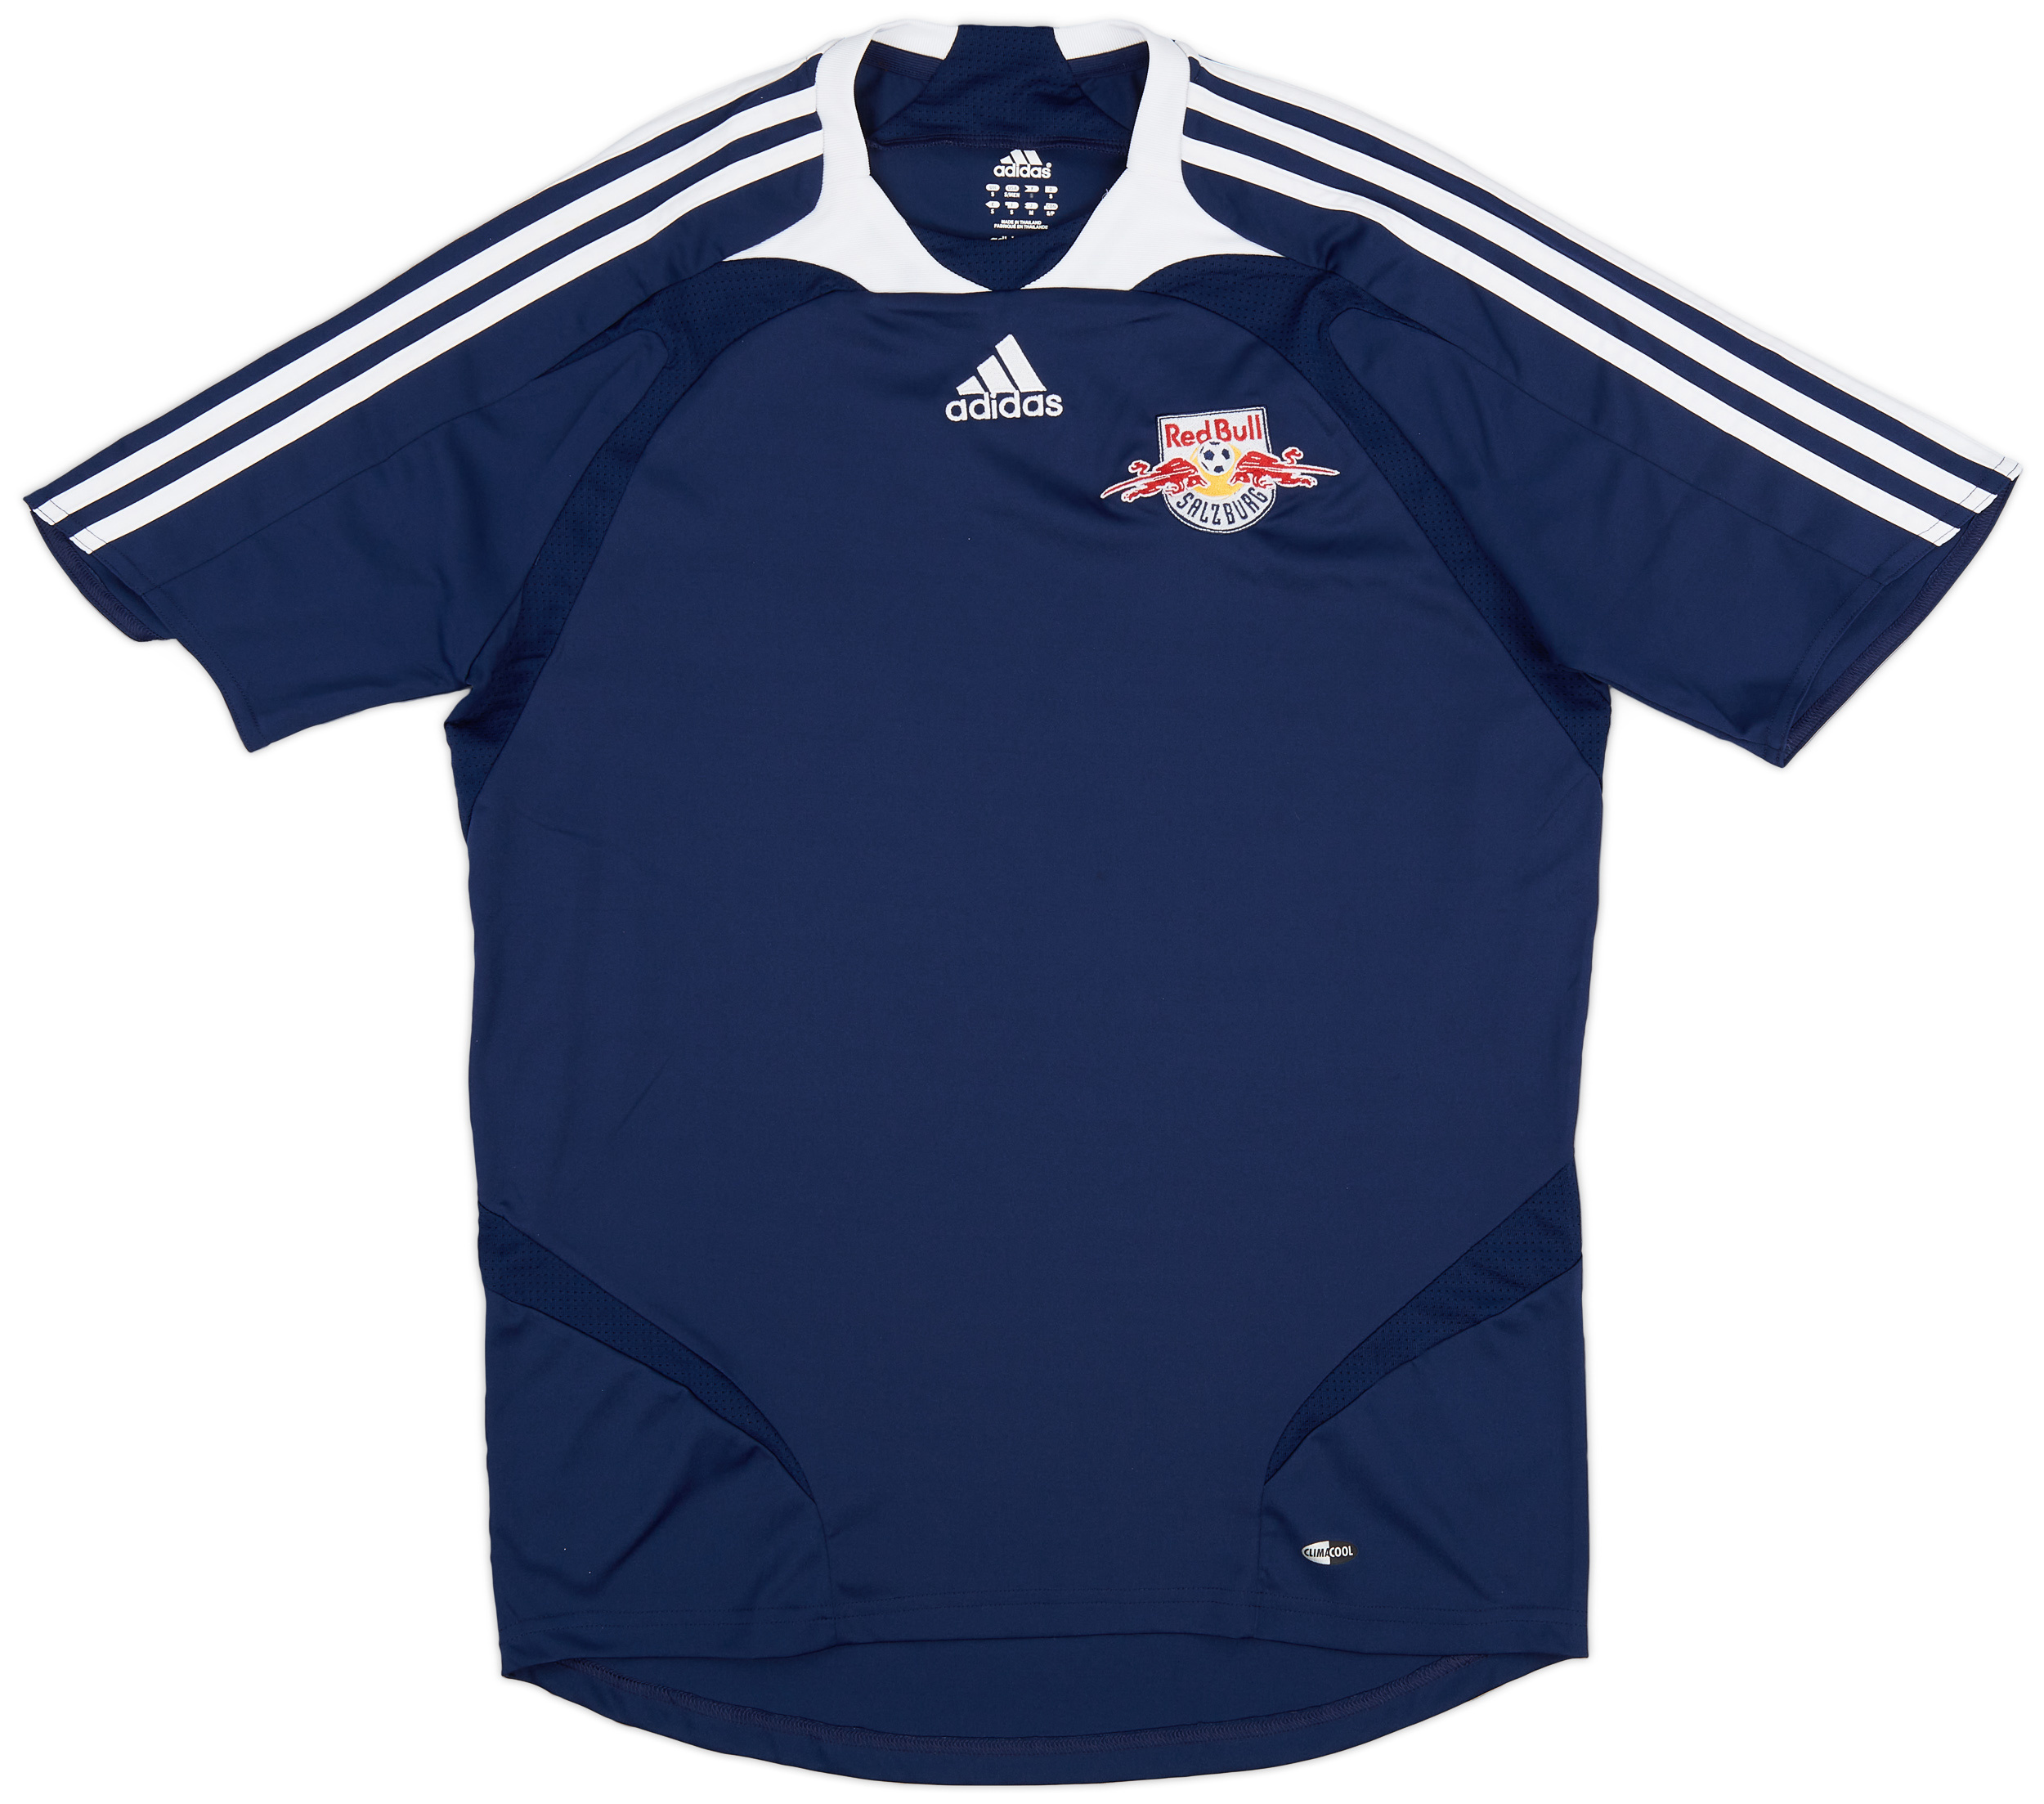 Red Bull Salzburg  Fora camisa (Original)